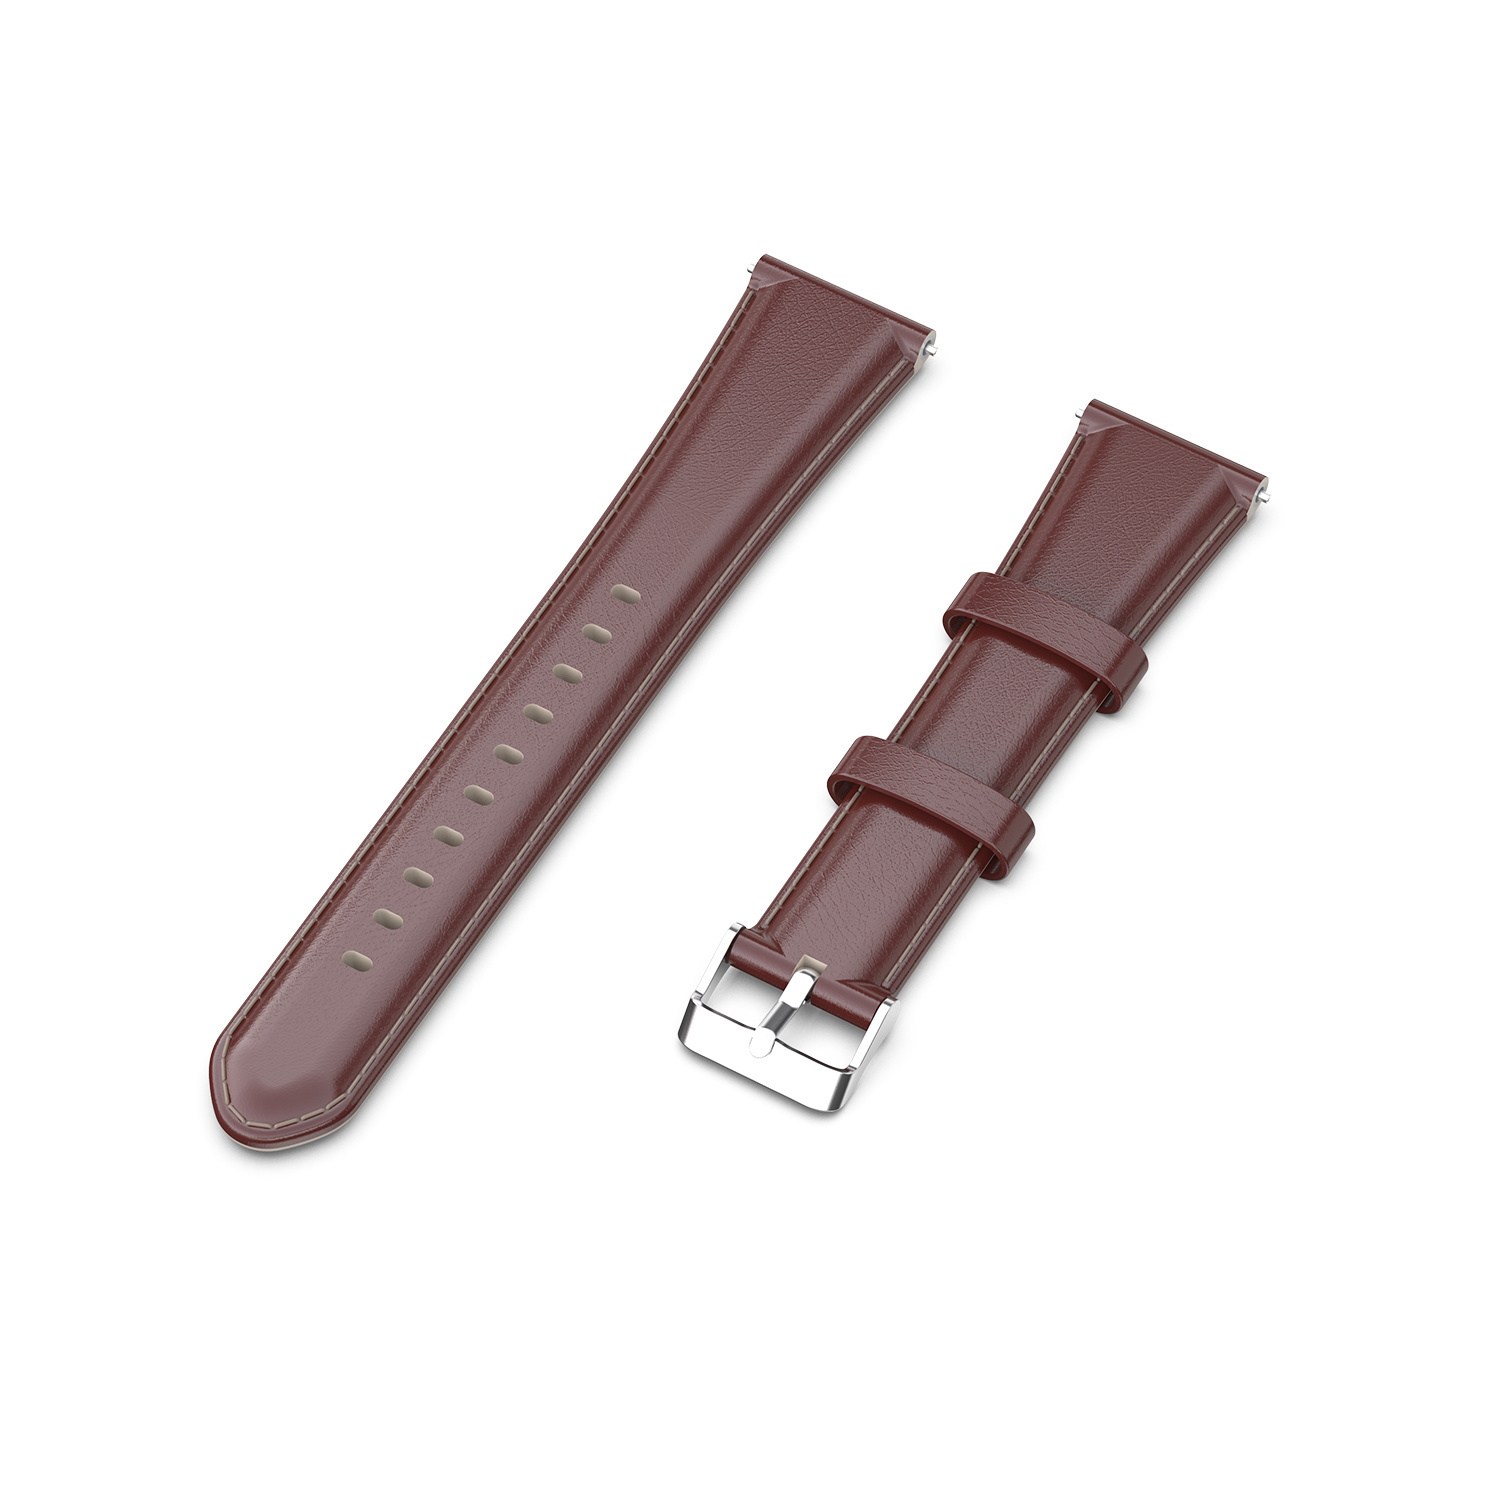 Cinturino in pelle per Samsung Galaxy Watch - marrone chiaro